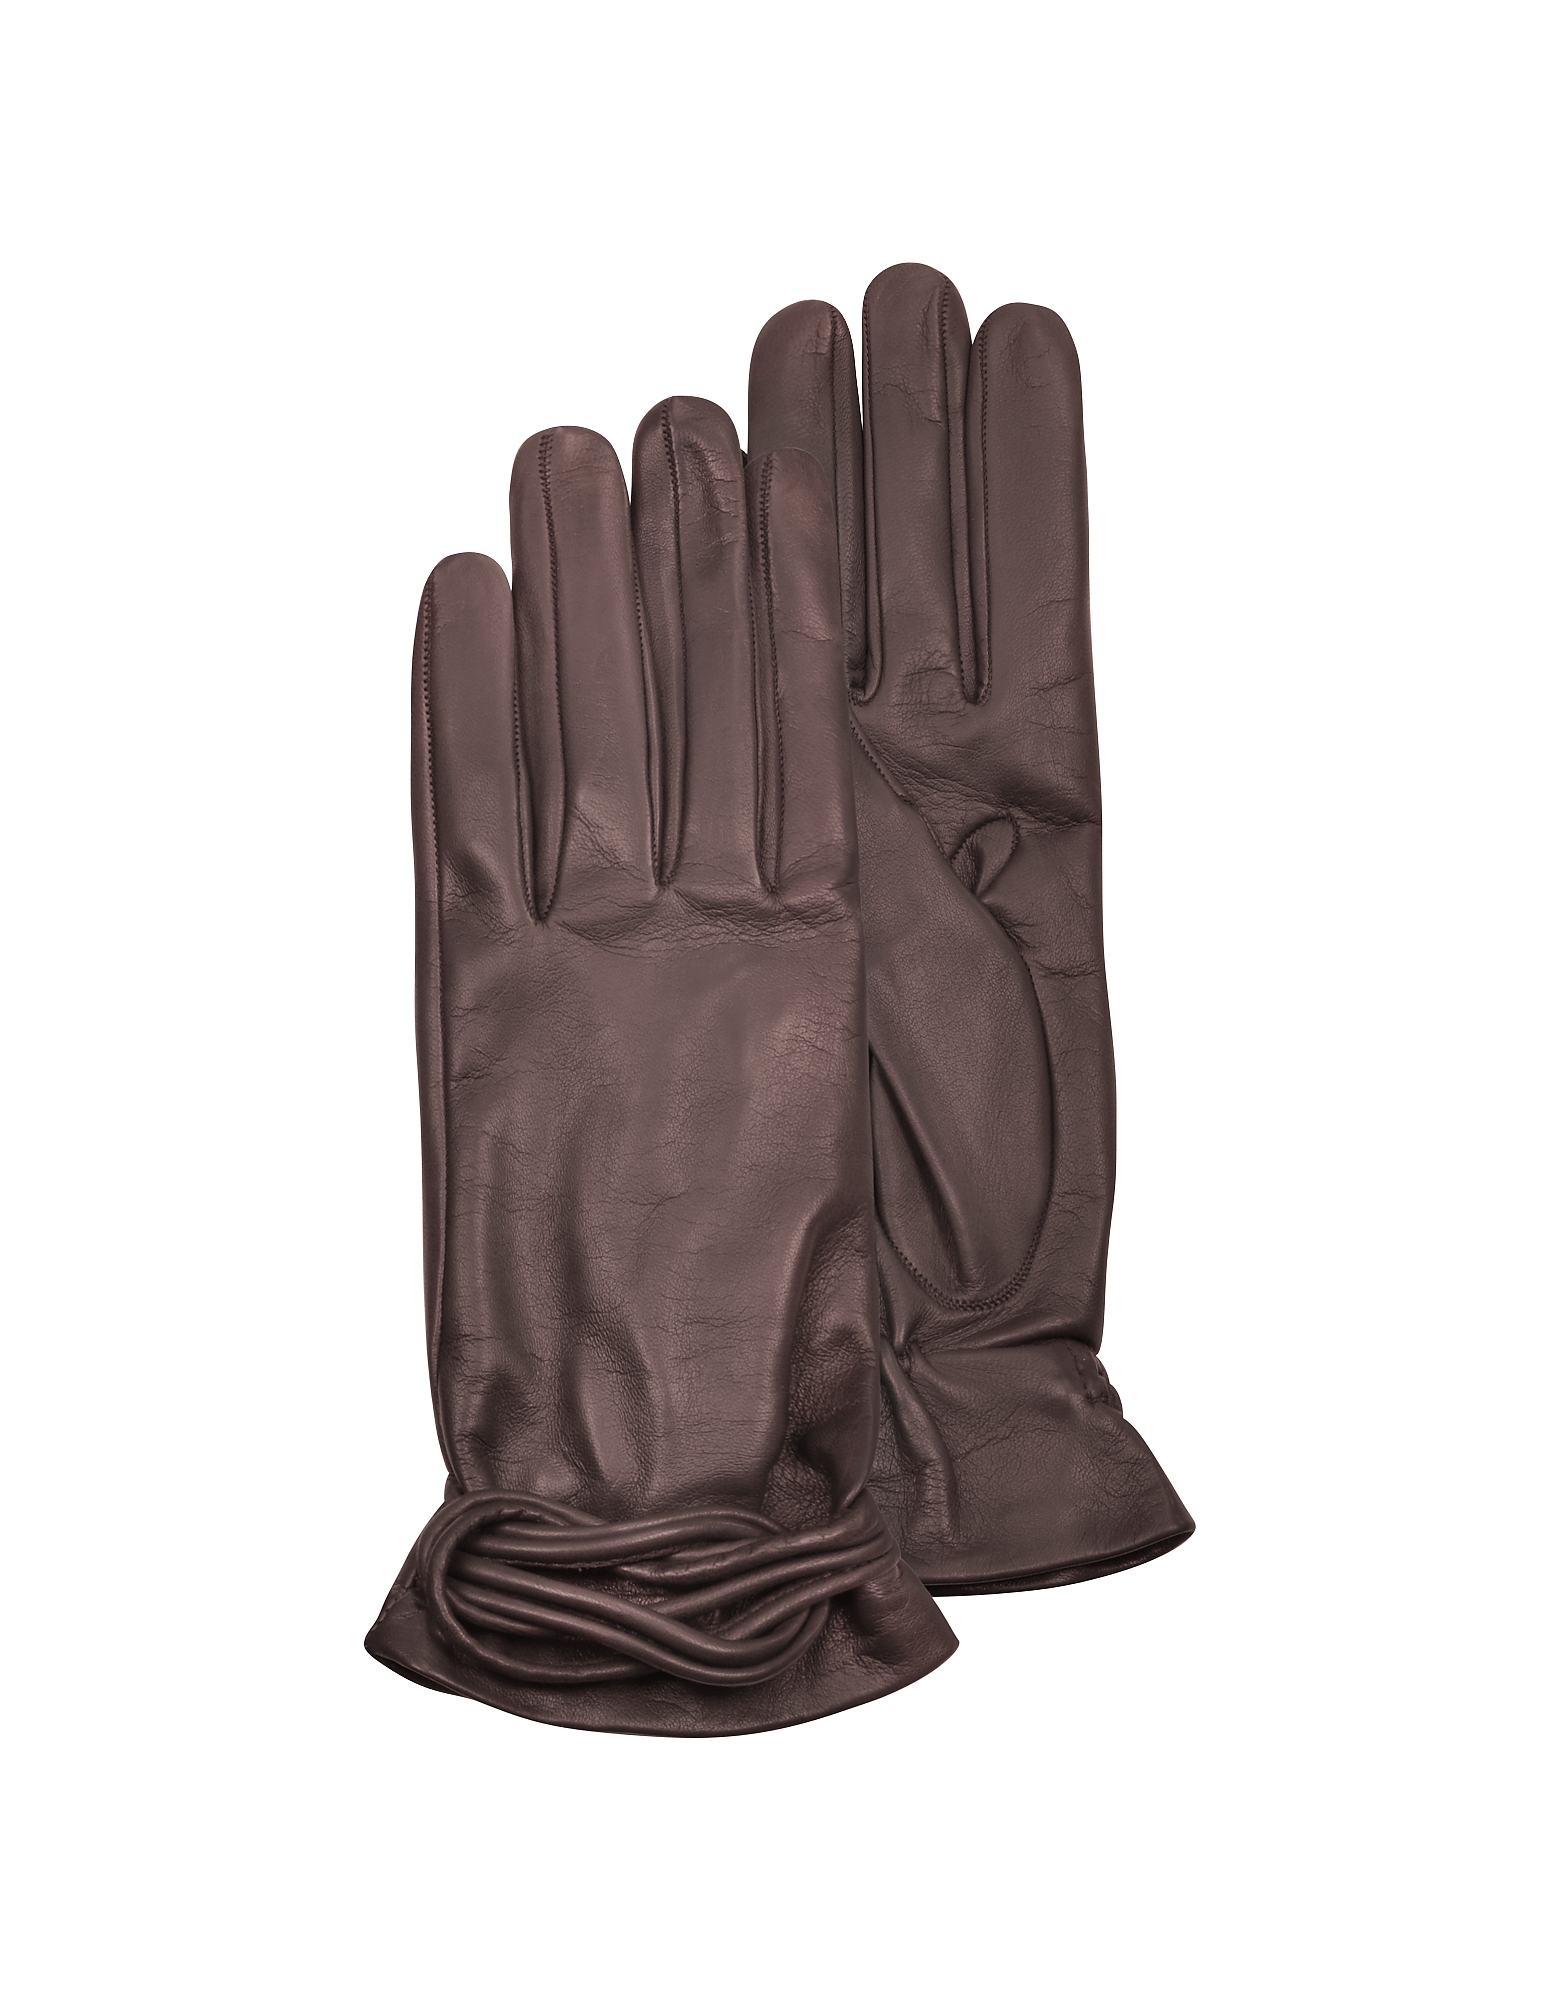 Forzieri Women's Gloves Women's Brown Leather Gloves w/Knot